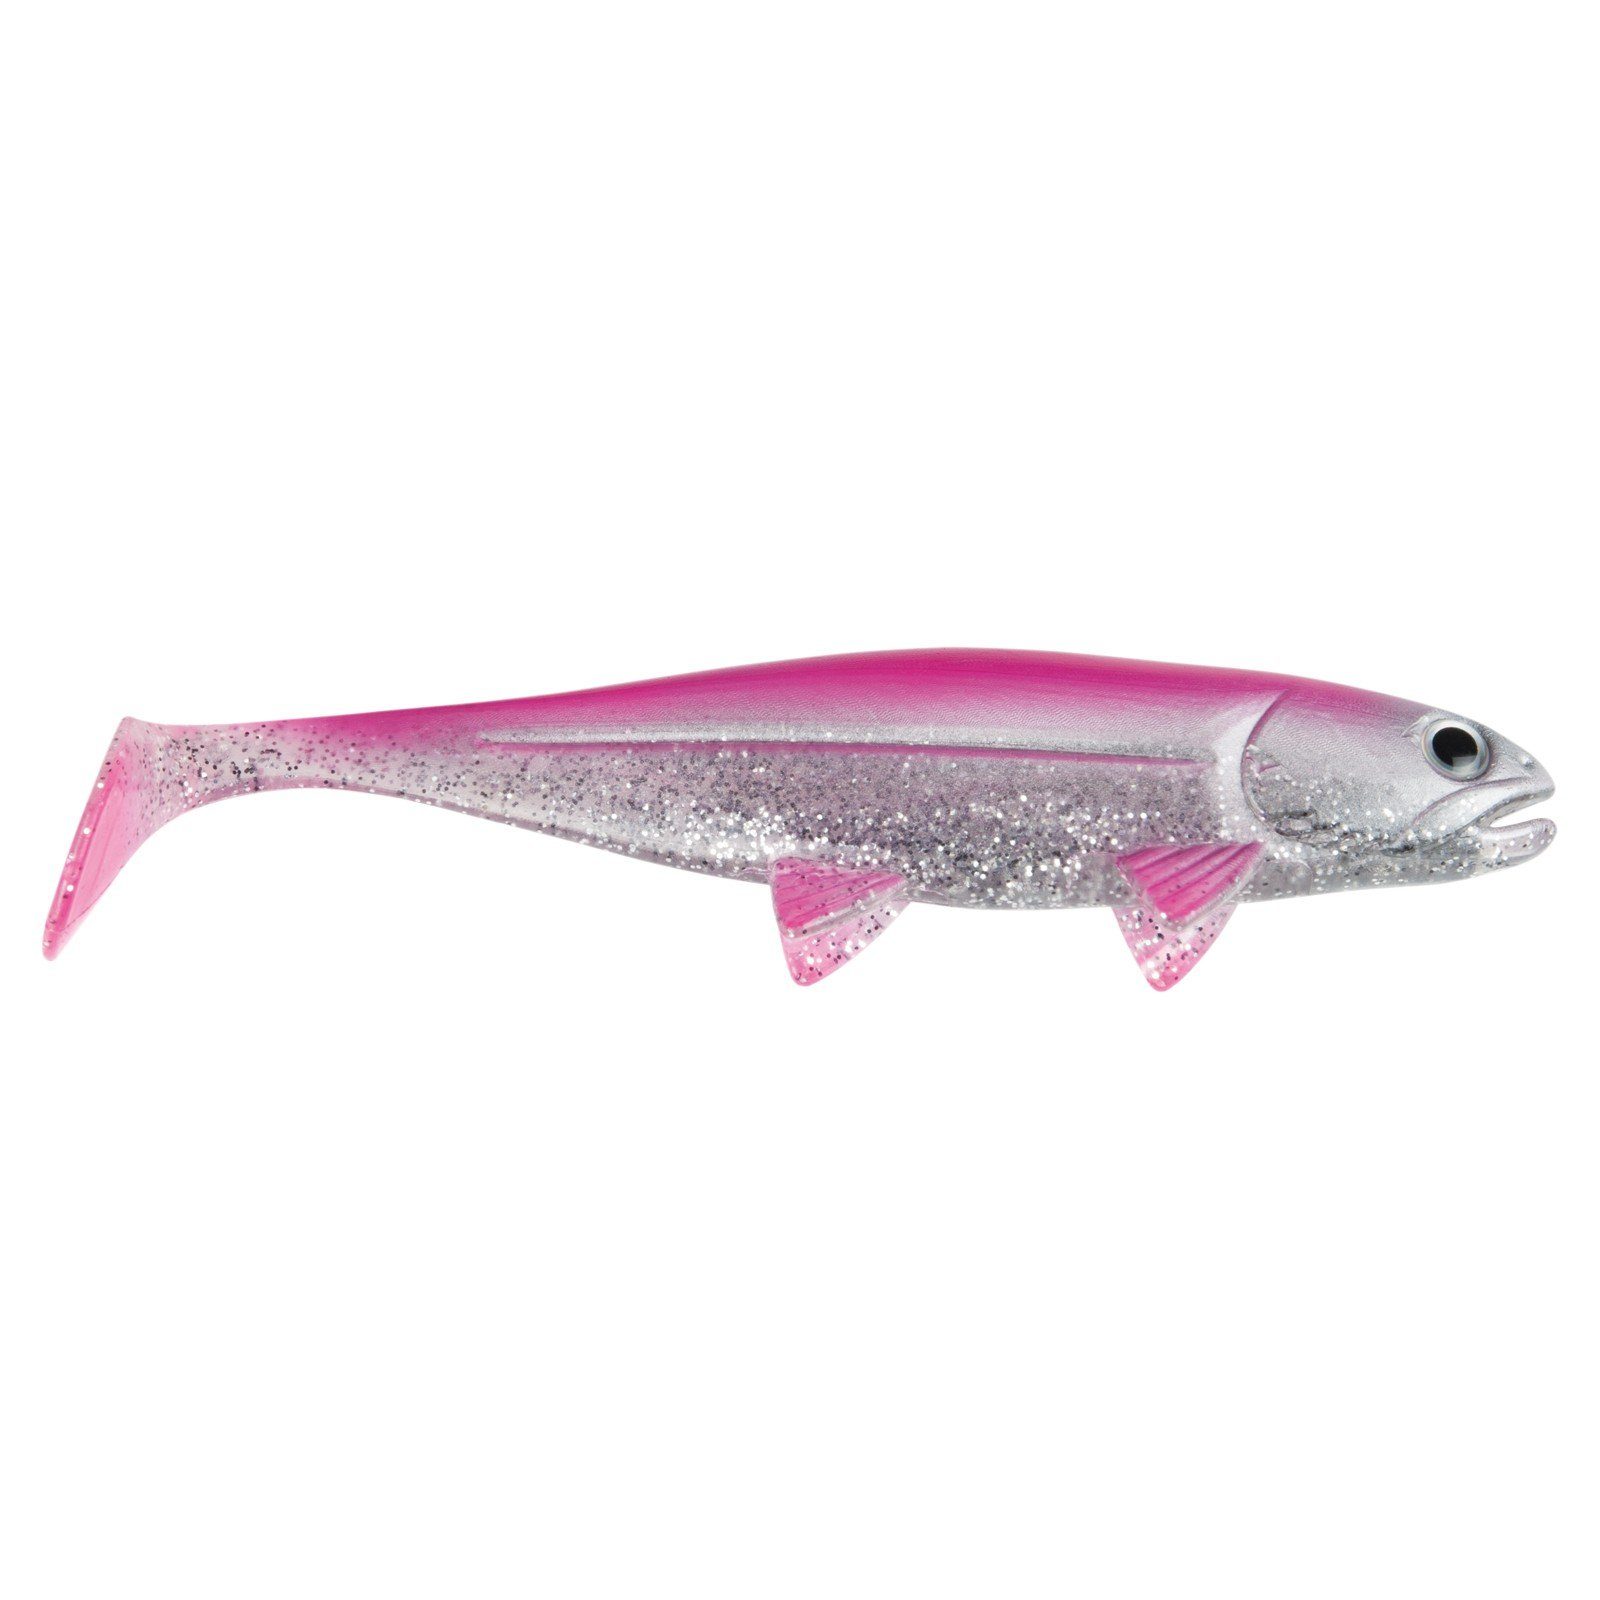 Pretty 15cm Pink The Fishing Gummifisch Jackson Jackson Fish Kunstköder,